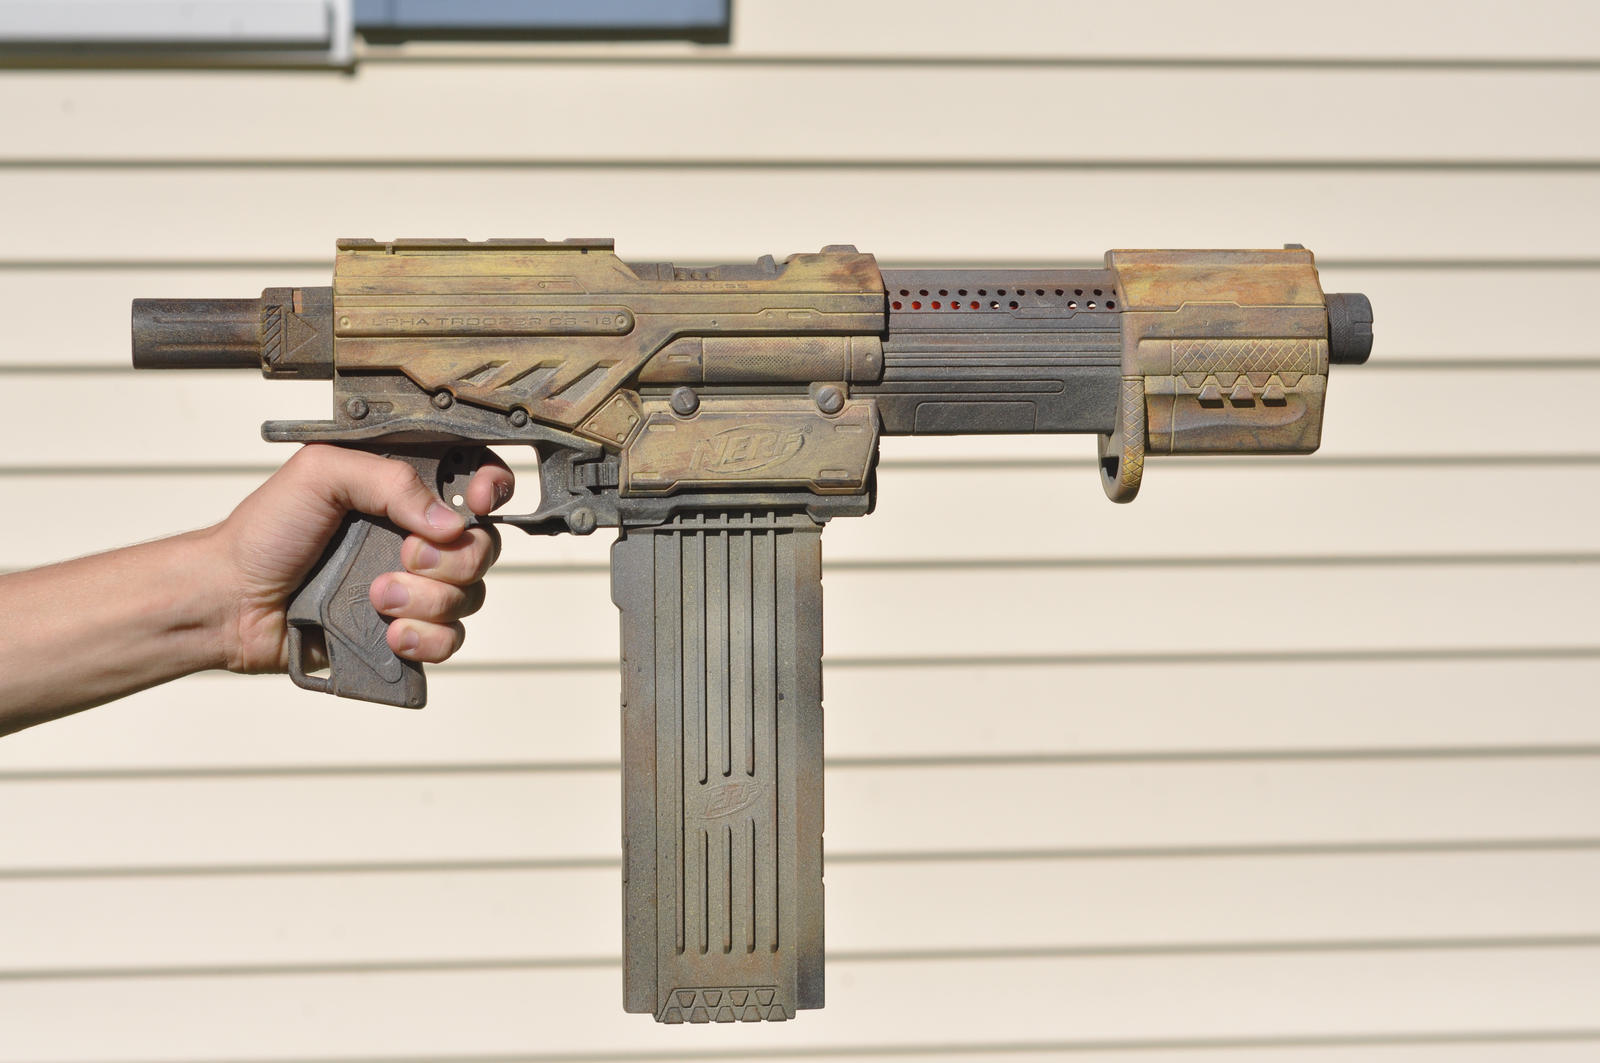 Steampunk Sniper Rifle (Nerf Longstrike) by relasine on DeviantArt